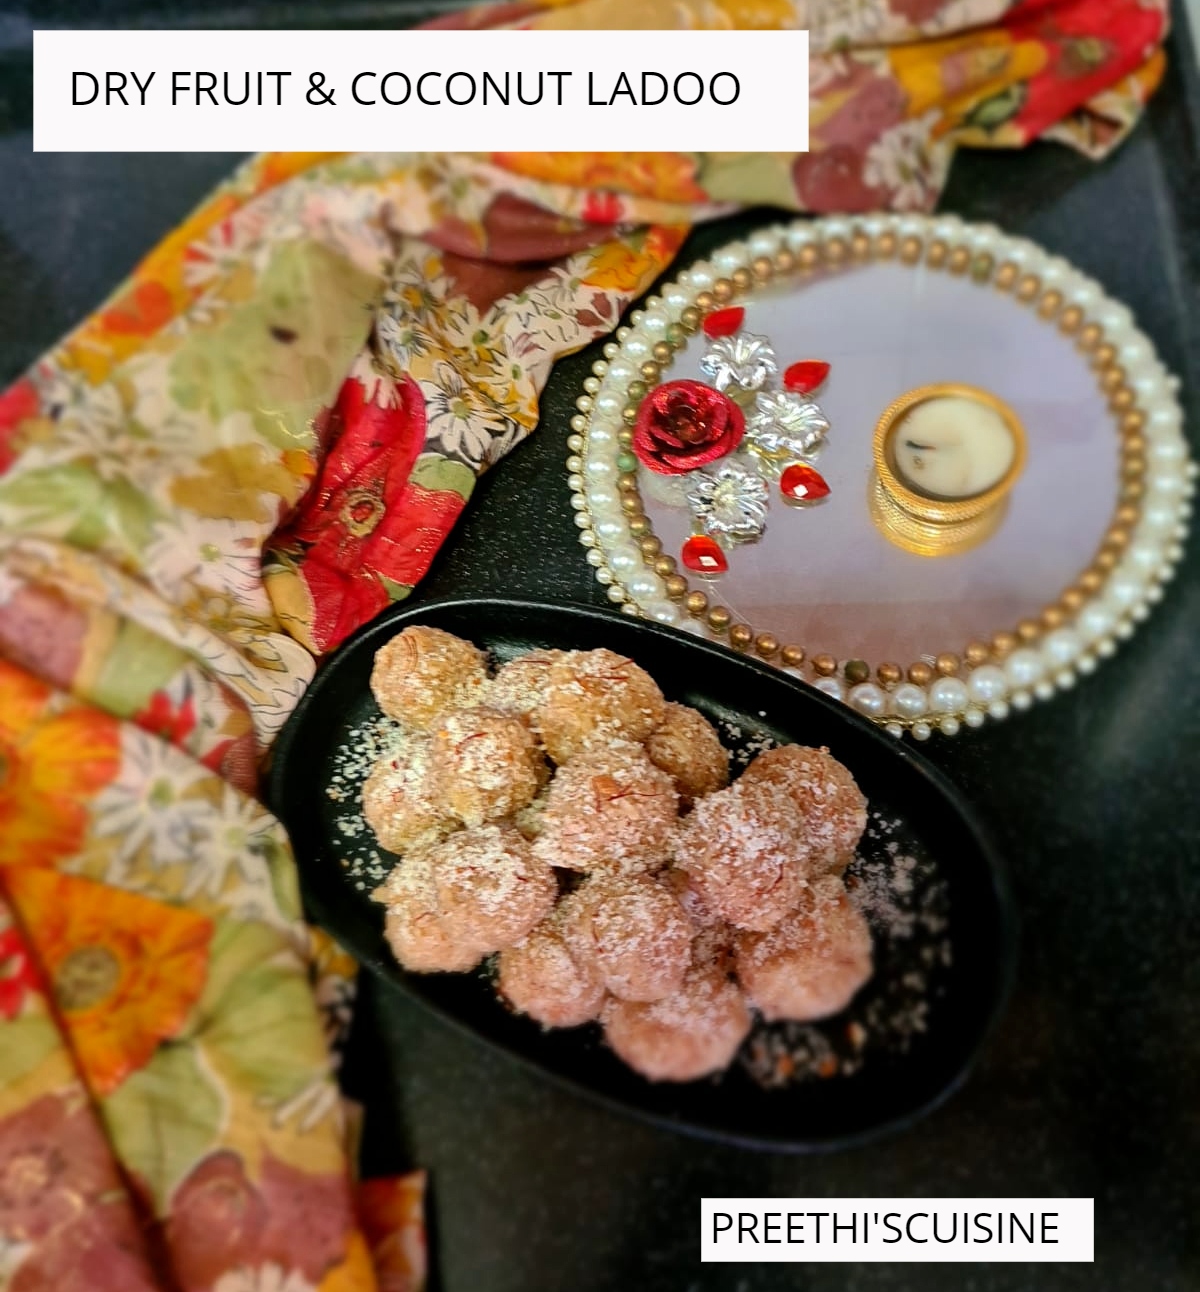 DRY FRUIT & COCONUT LADOO